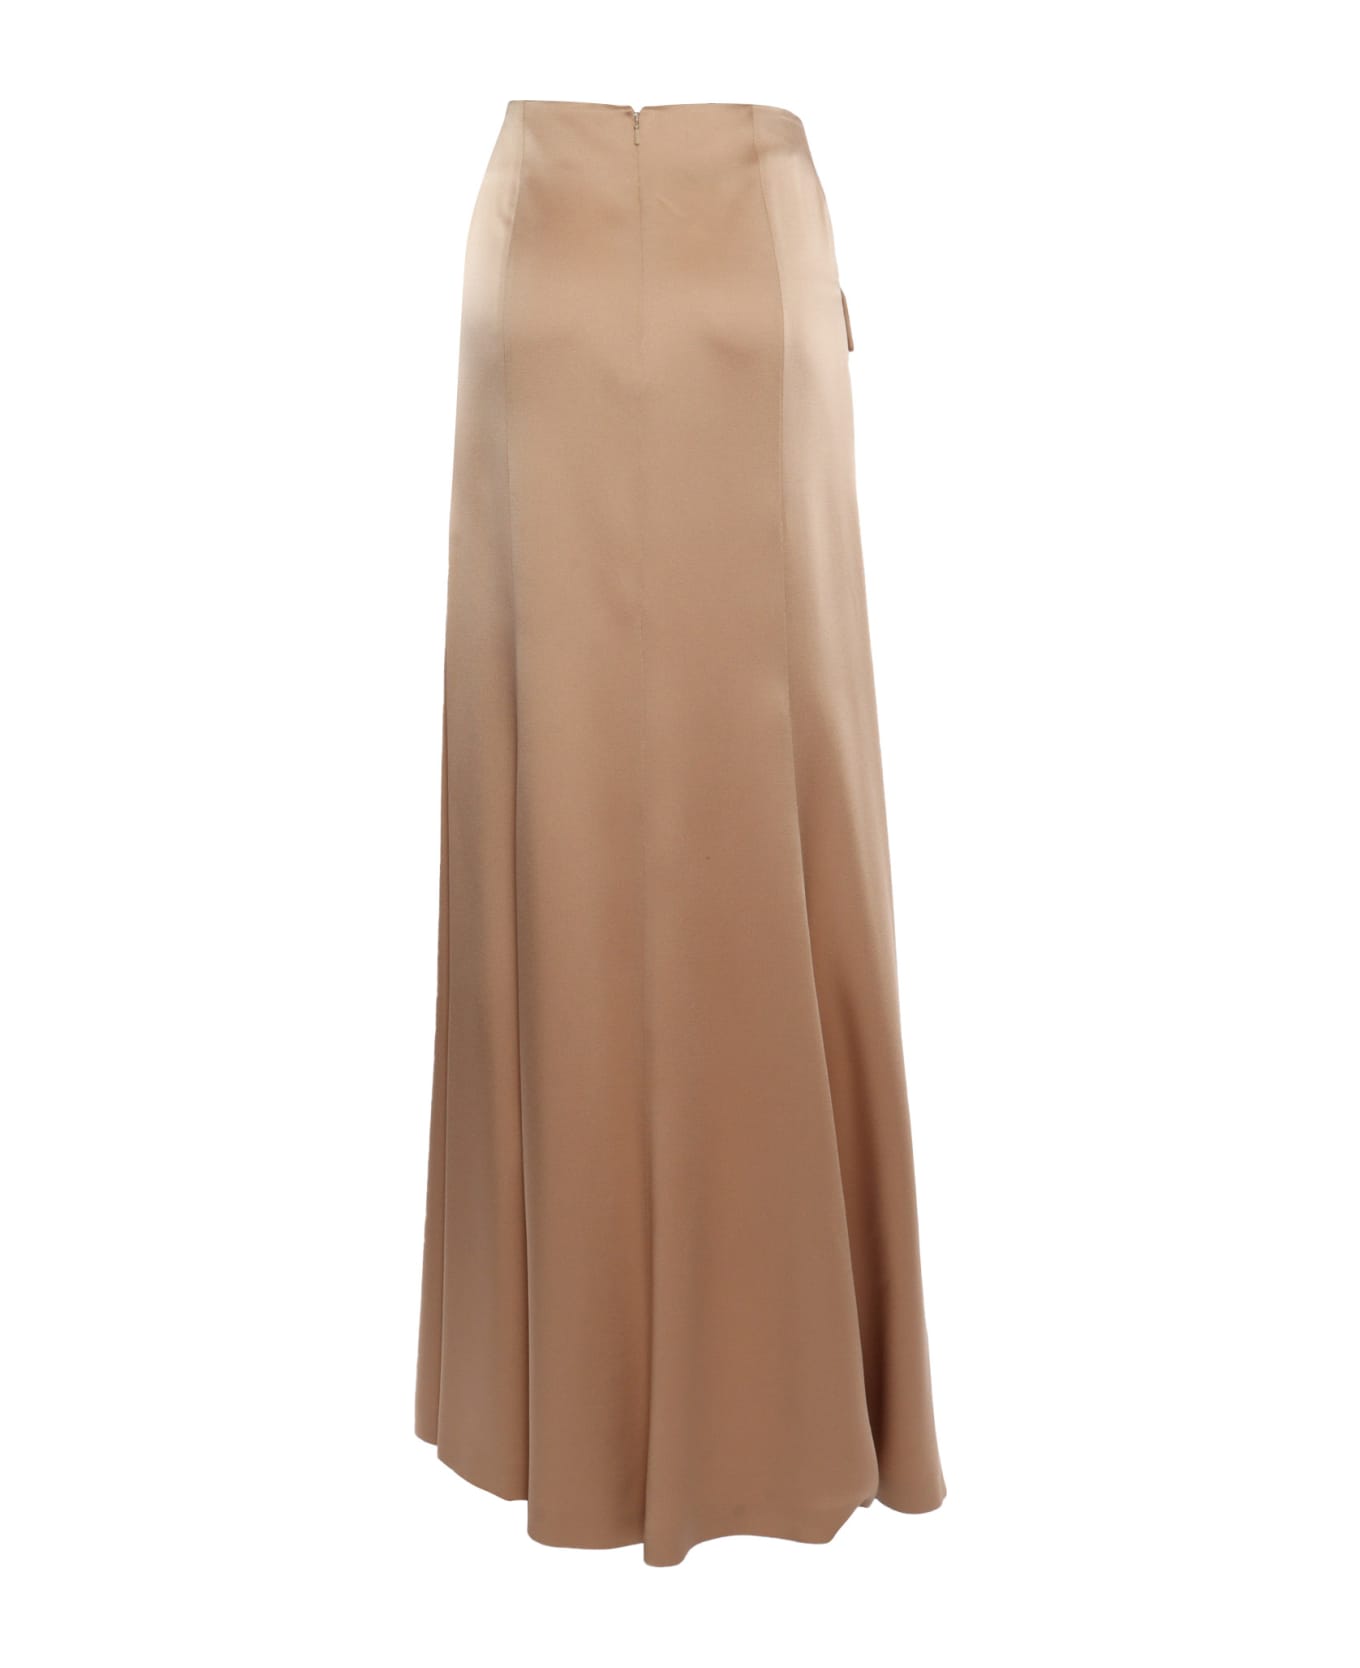 Alberta Ferretti Camel Colored Long Skirt - BEIGE スカート